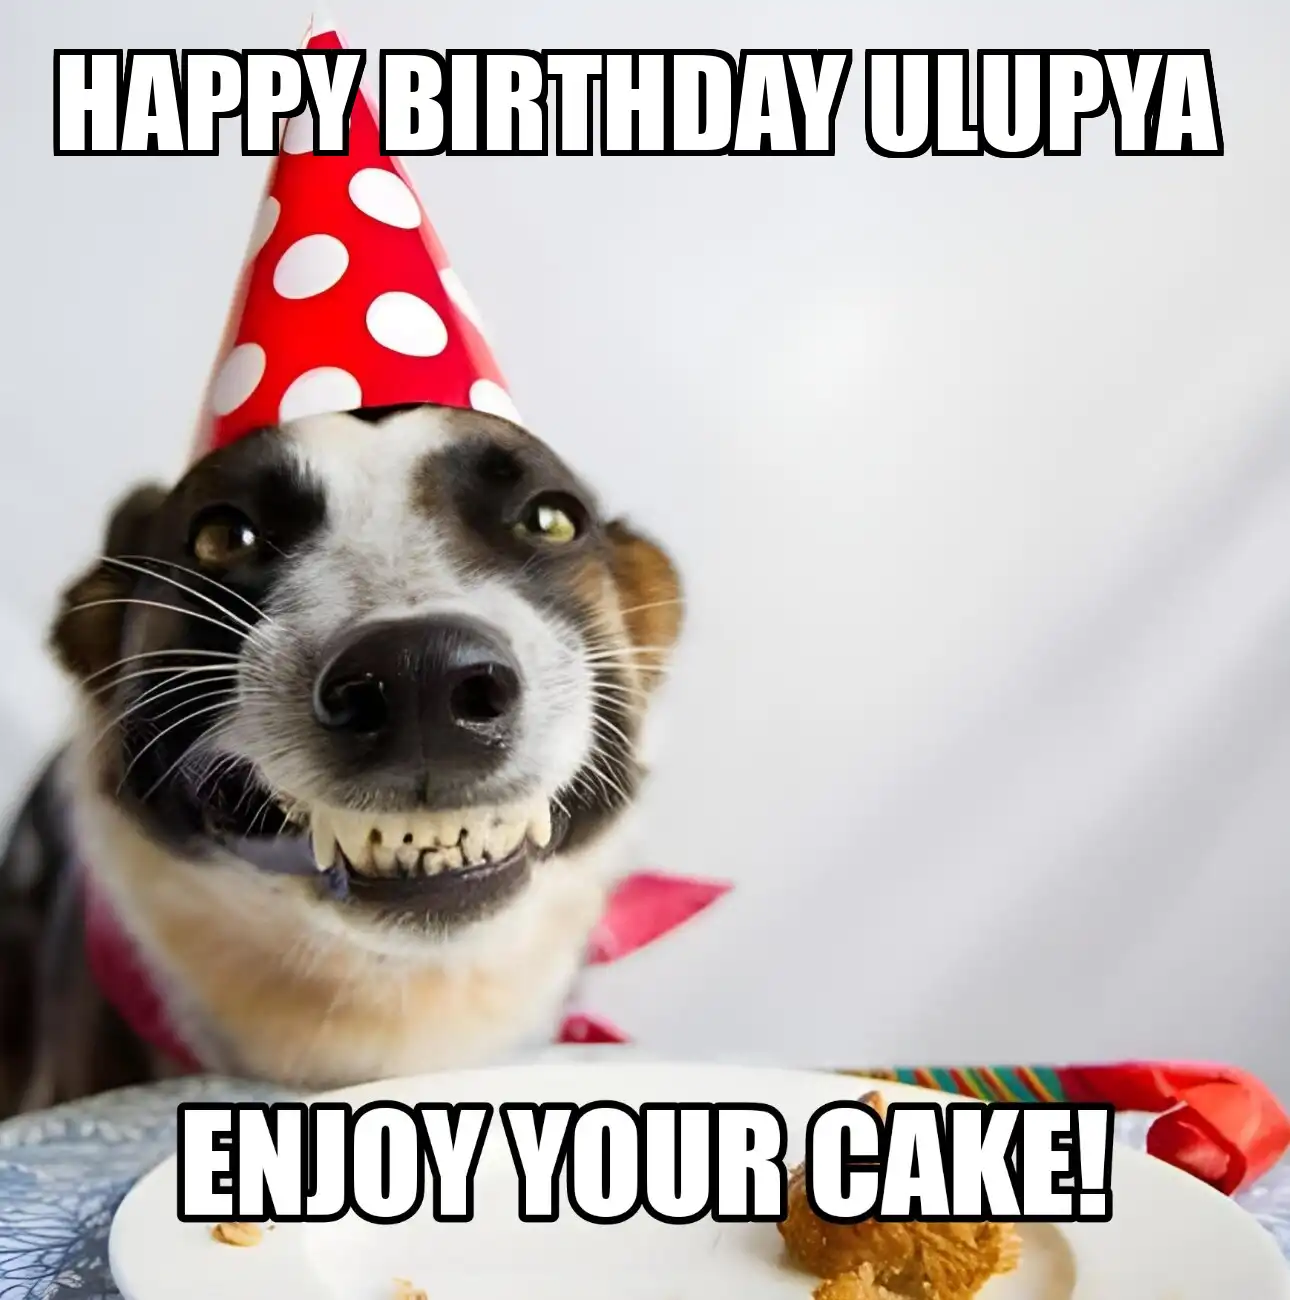 Happy Birthday Ulupya Enjoy Your Cake Dog Meme